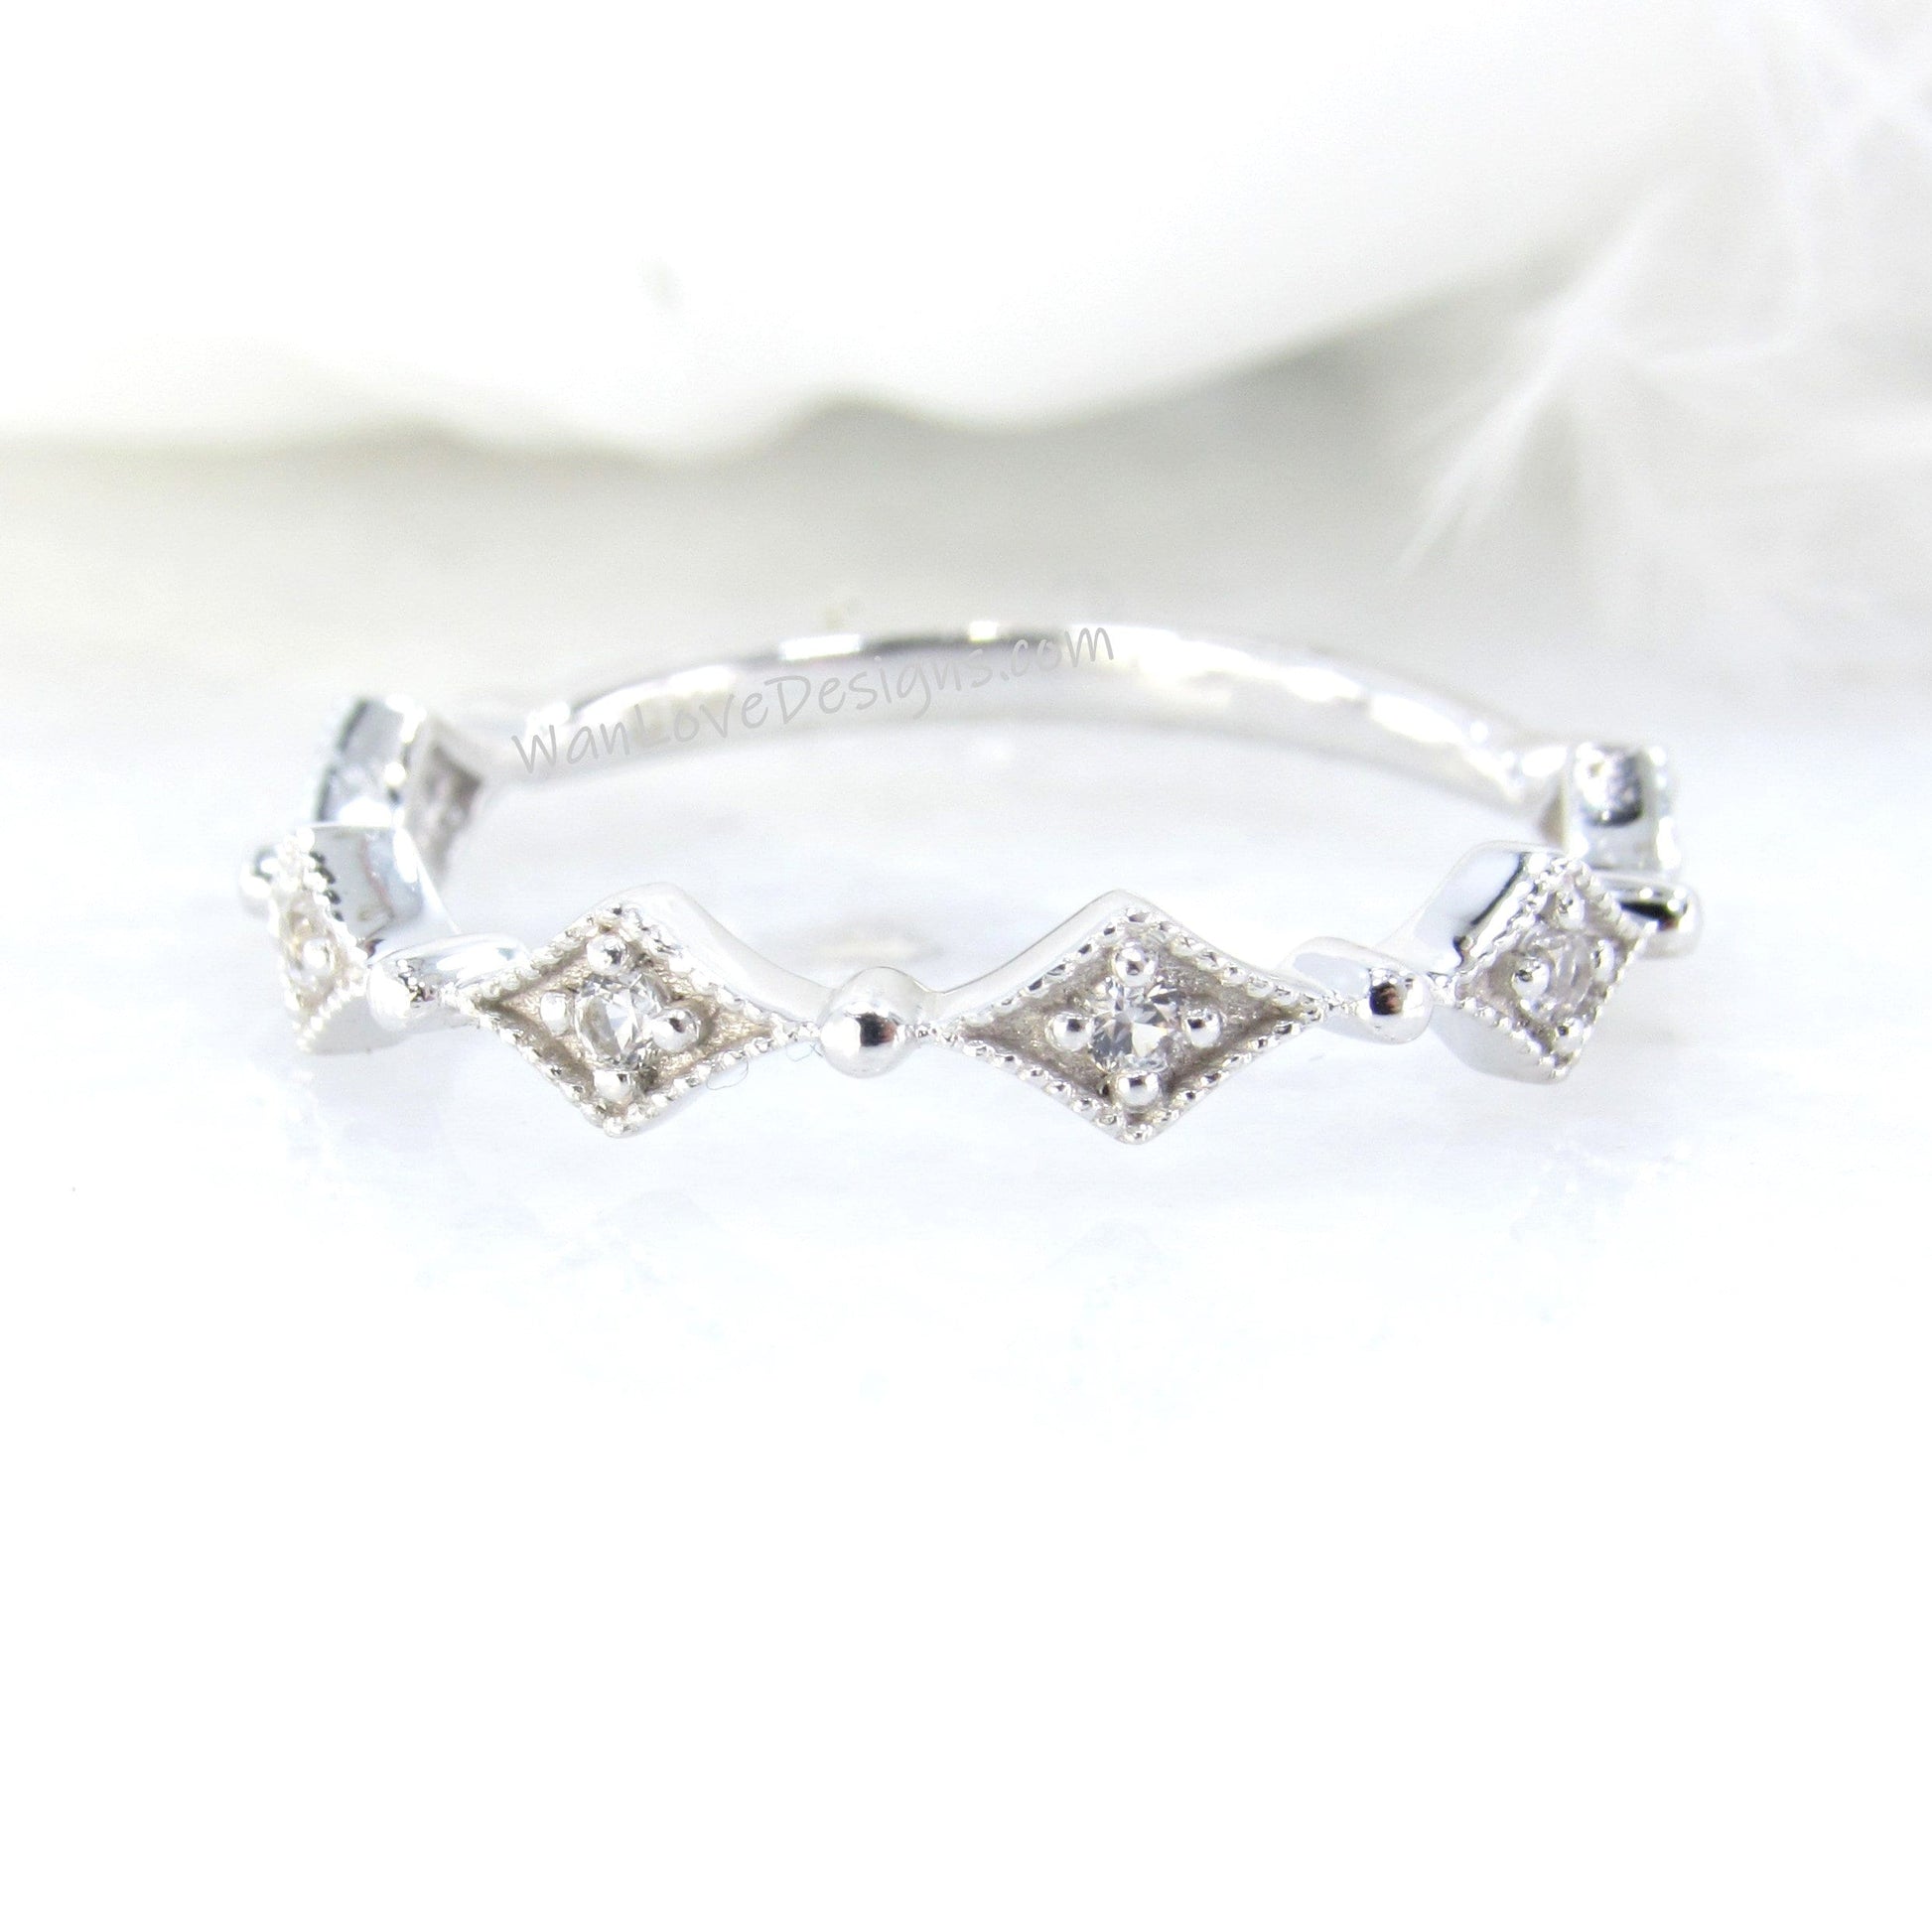 Star almost eternity diamond band, Half Eternity diamond wedding band, antique inspired milgrain geometric ring, unique wedding band Wan Love Designs